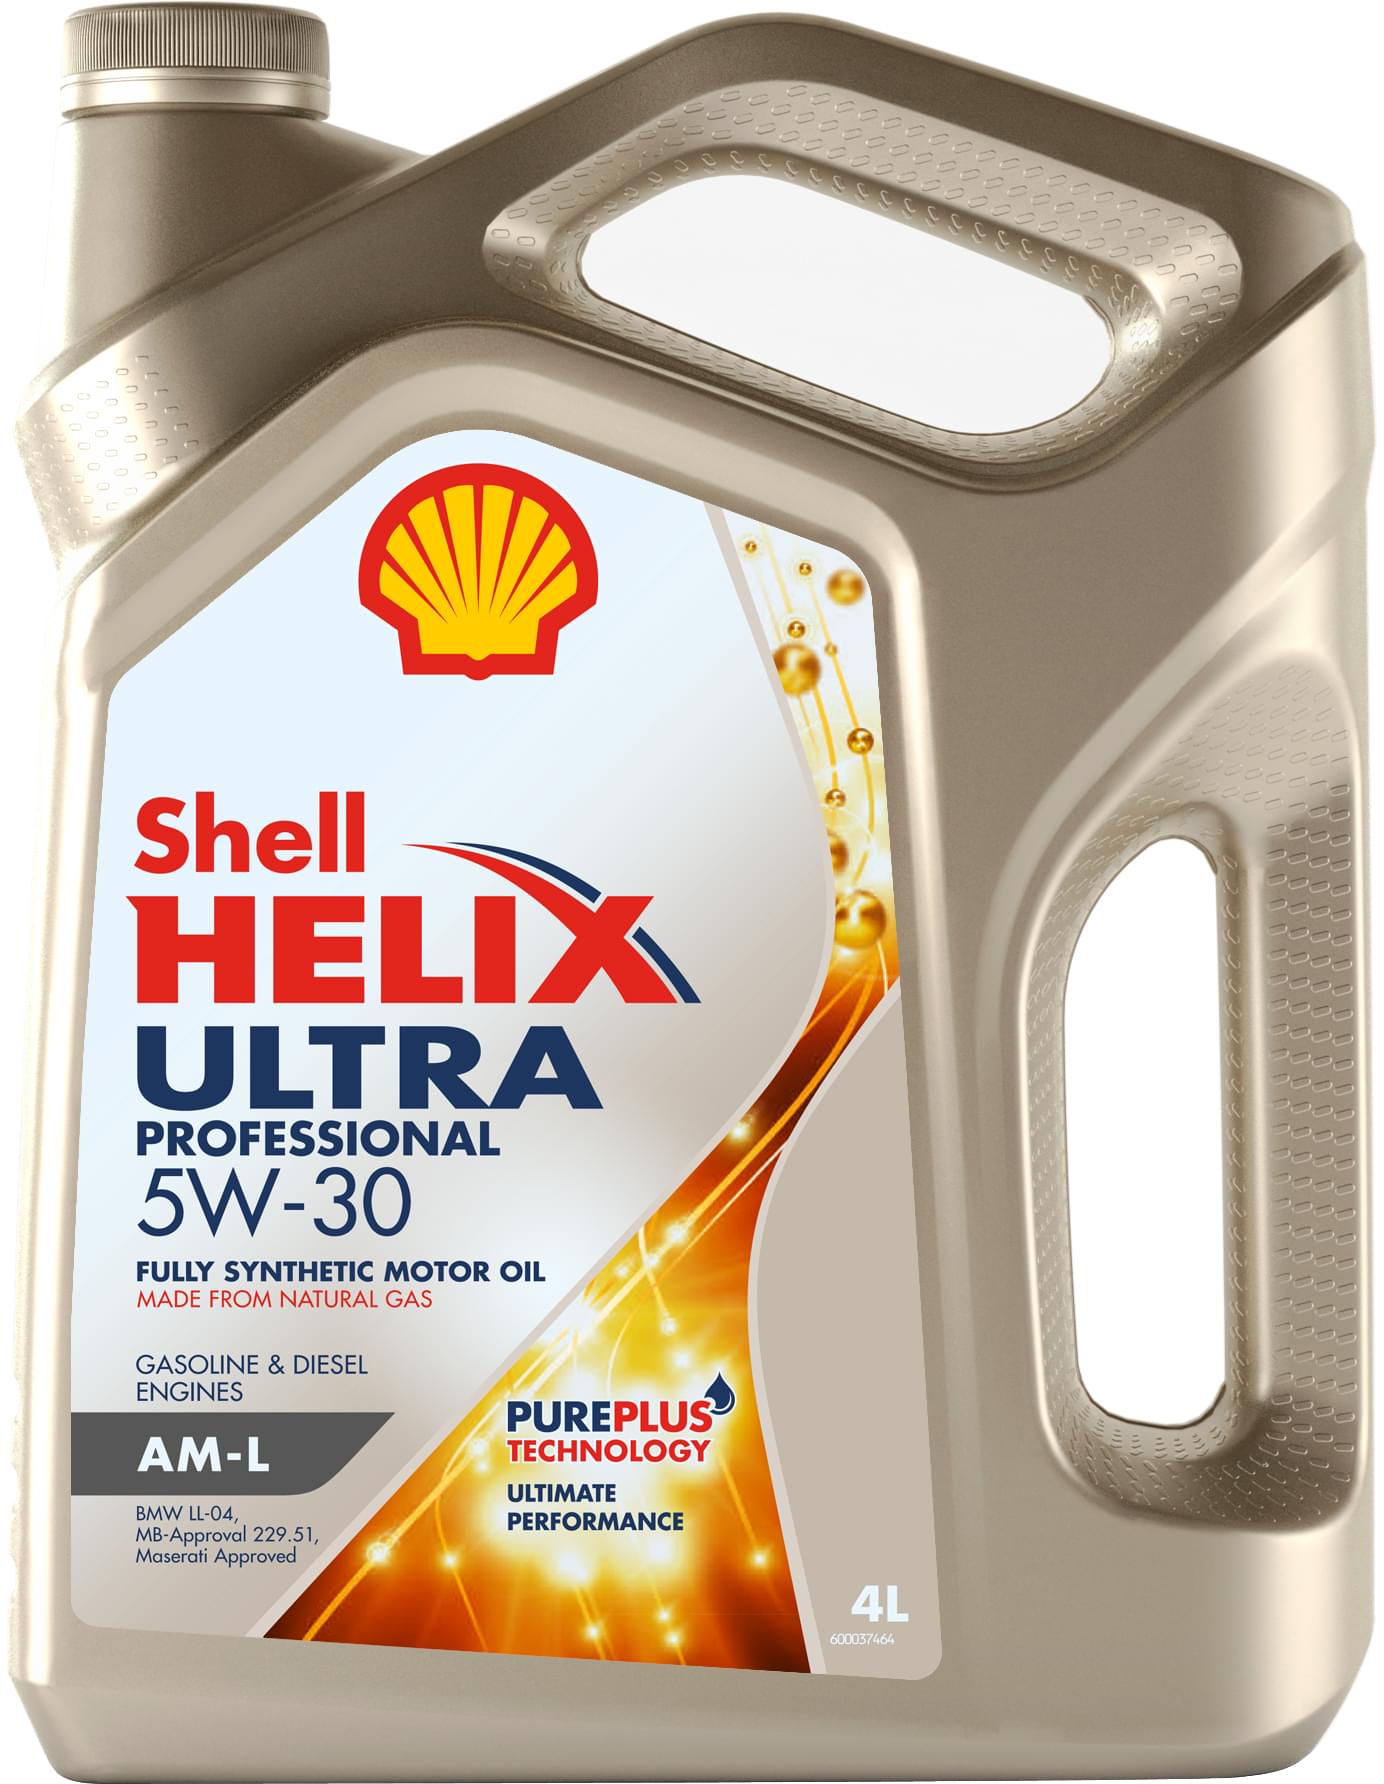 Моторное масло Моторное масло Shell Helix Ultra Professional AM-L 5W-30  синтетика купить в Москве - цены от официального дистрибьютора «Шелл»